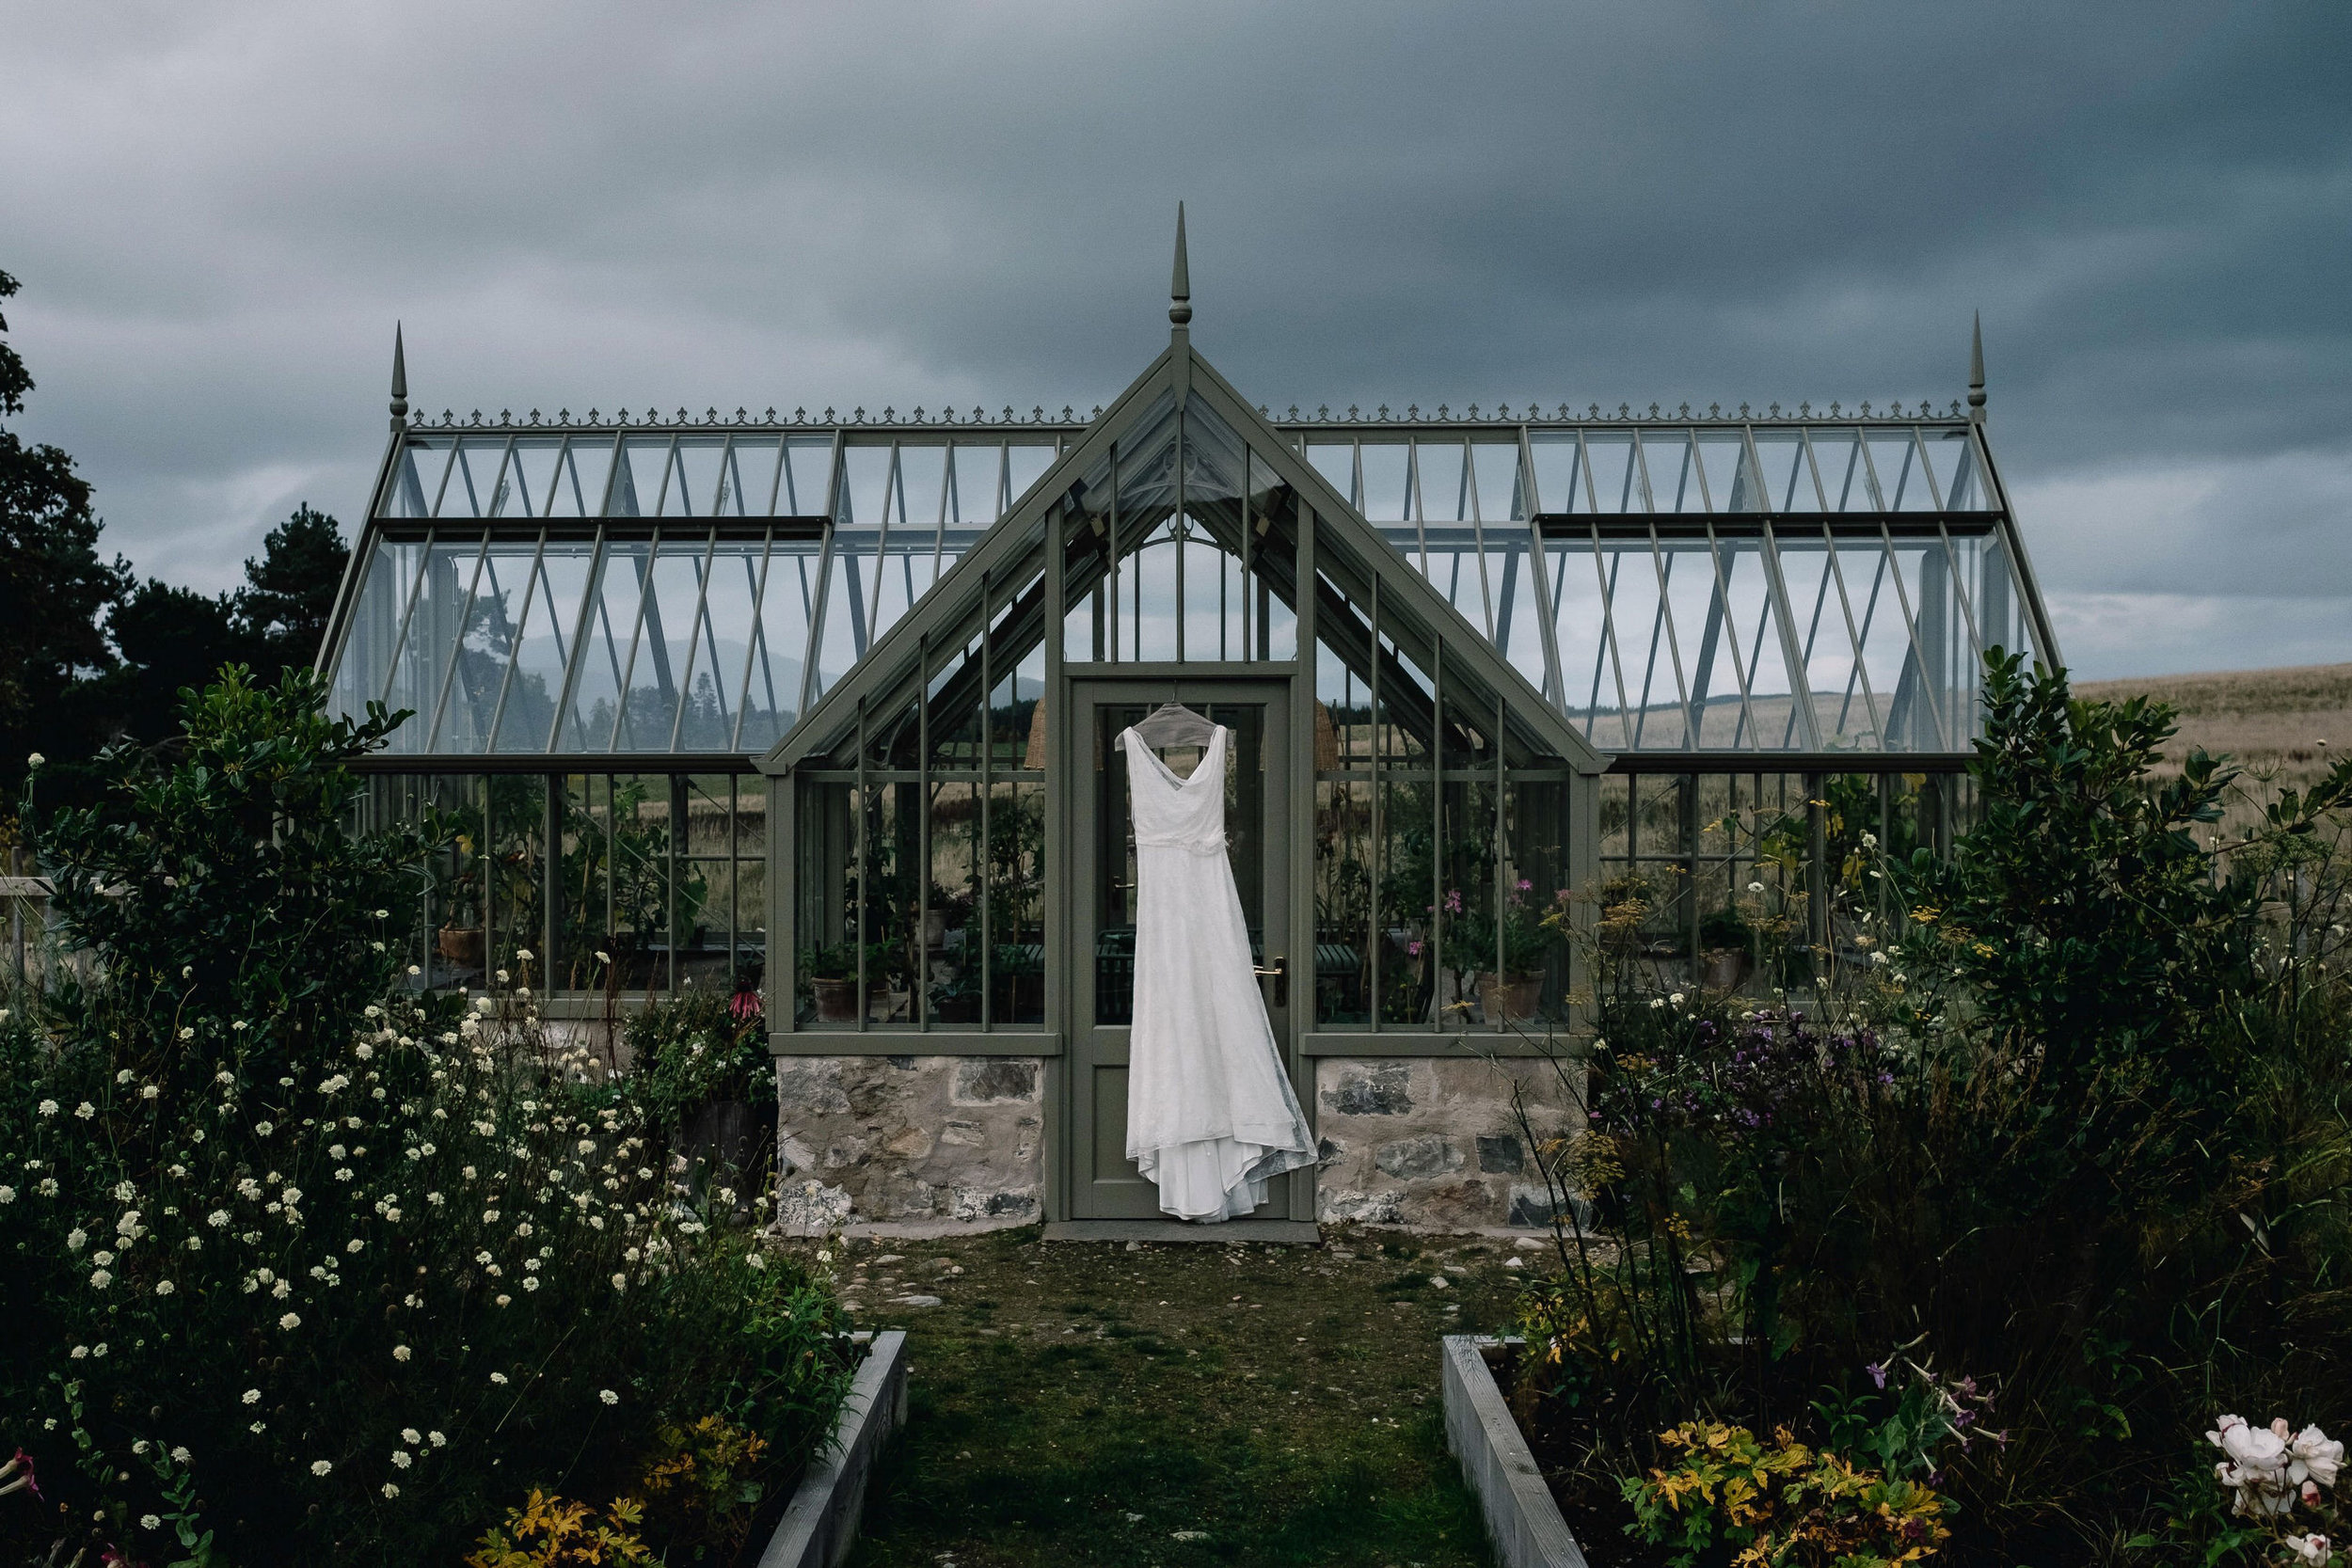  Wedding dress hangs from greenhouse on Killiehuntly Farmhouse. 